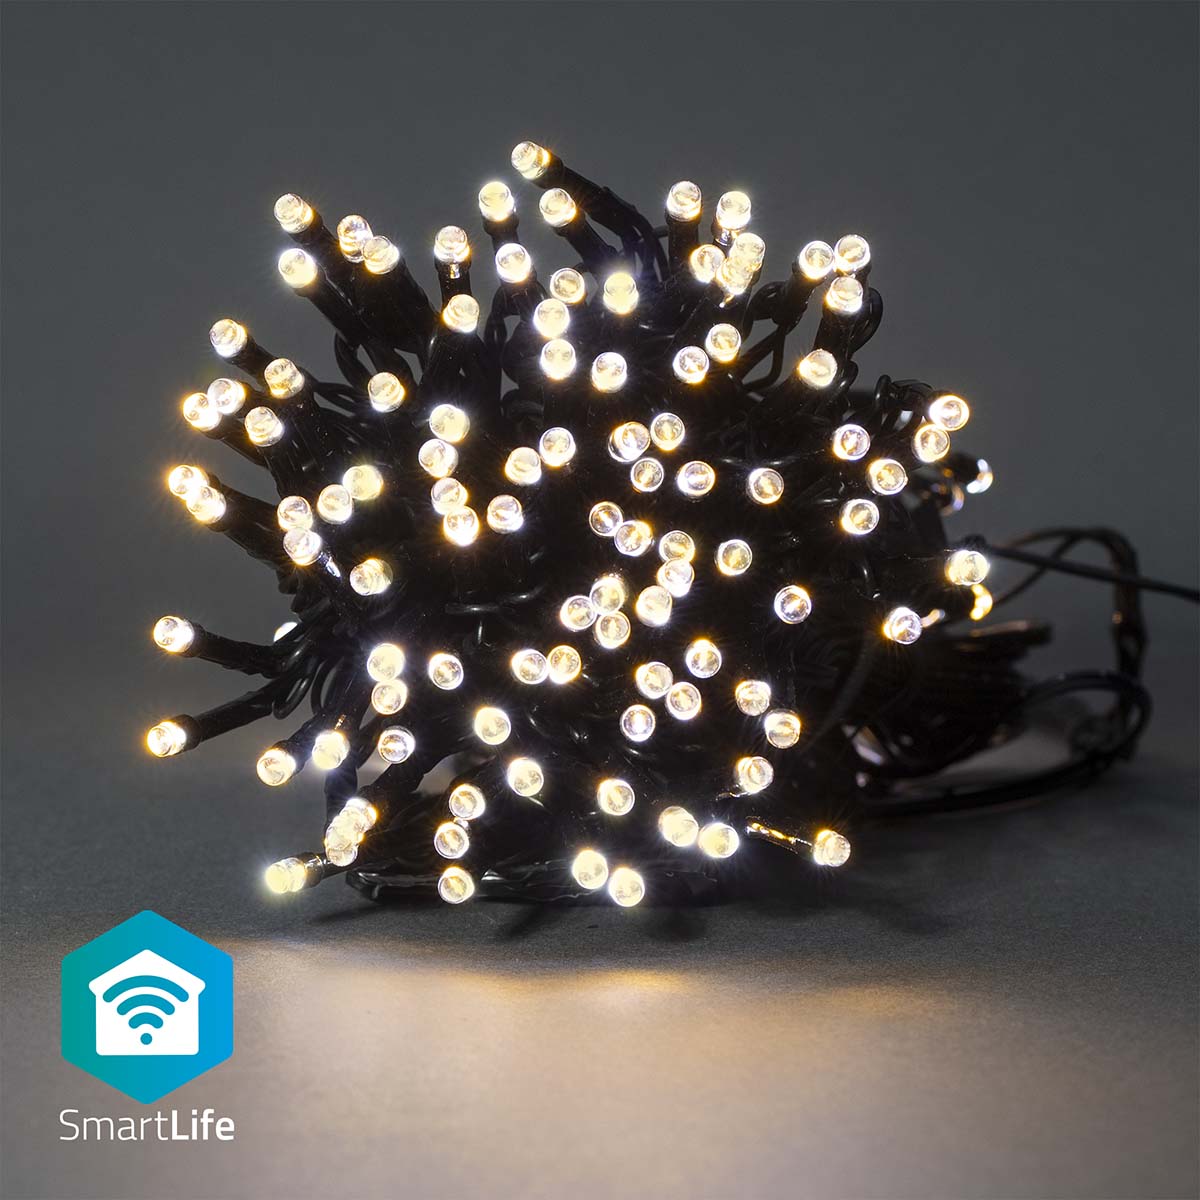 SmartLife Dekorative LED, Schnur, Wi-Fi, Warmweiss, 200 LED's